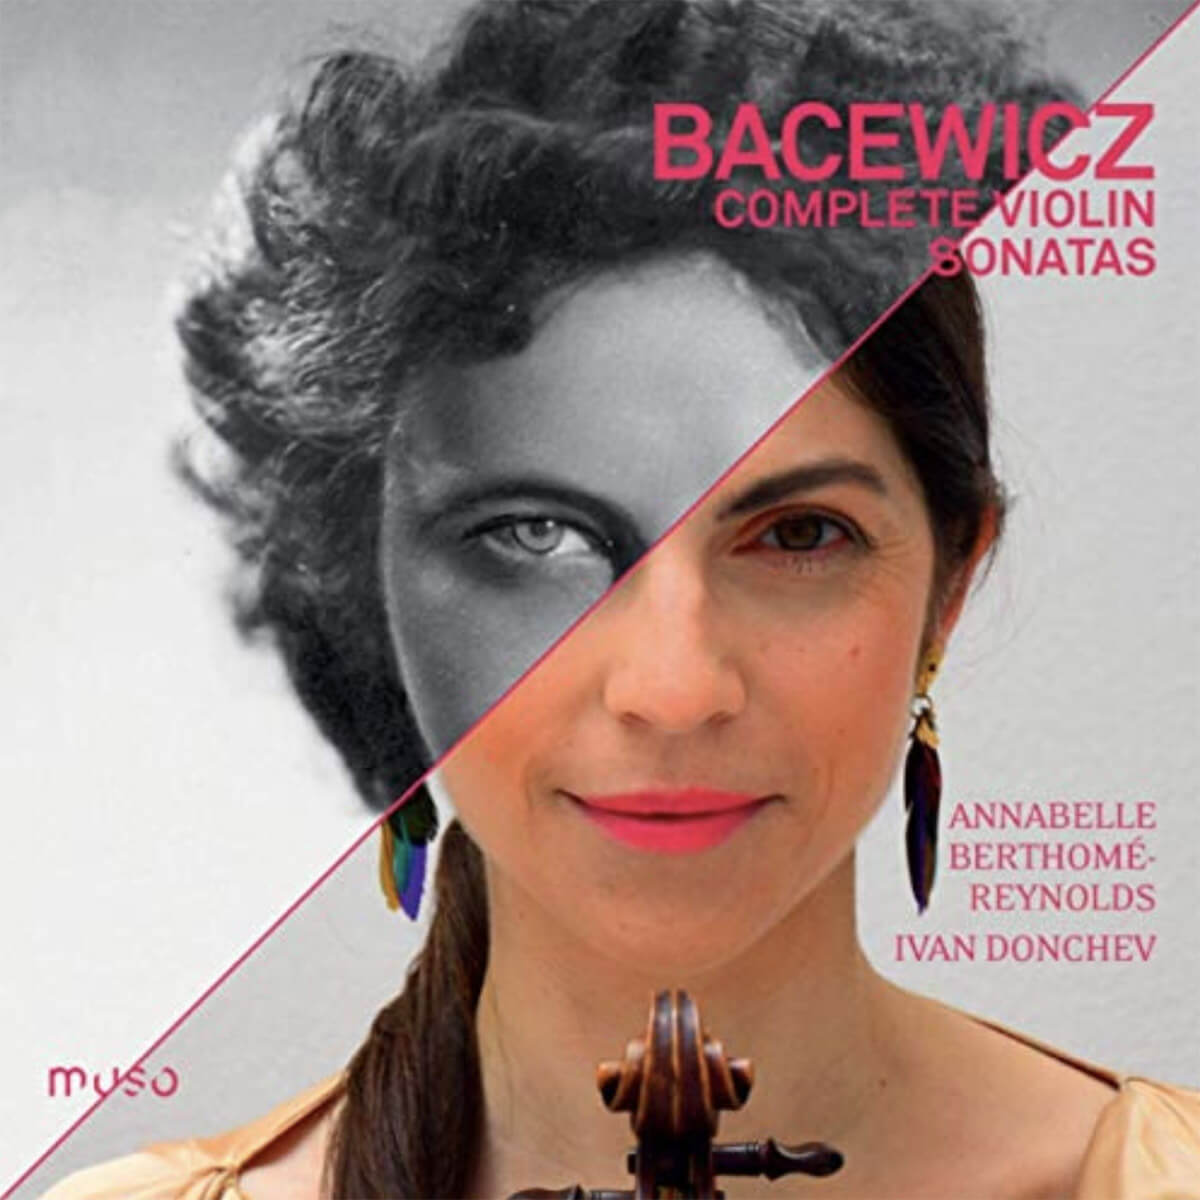 Grazyna Bacewicz - Complete Violin Sonatas